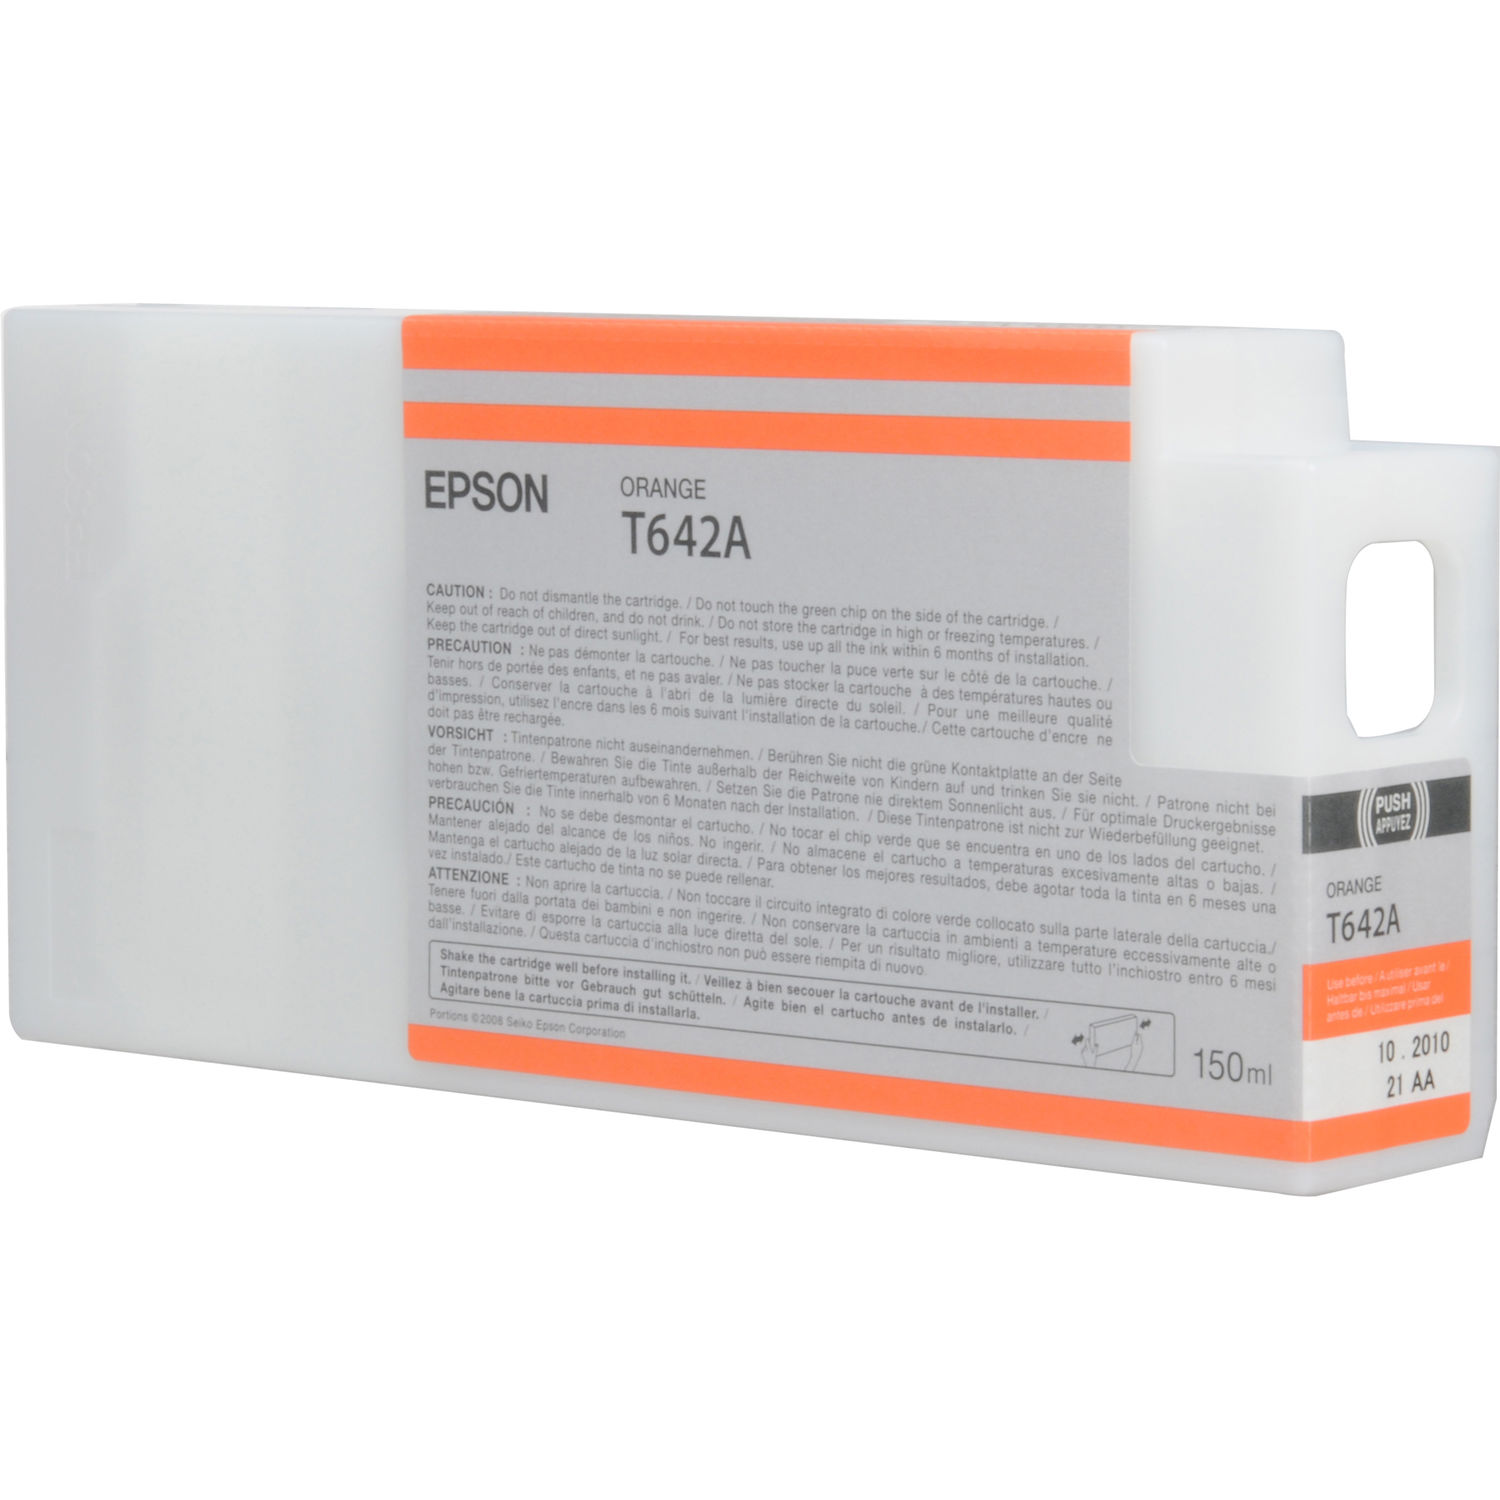 Cartucho de Tinta Epson T642A00 Ultrachrome Hdr Naranja para Impresoras Stylus Pro Seleccionadas 15